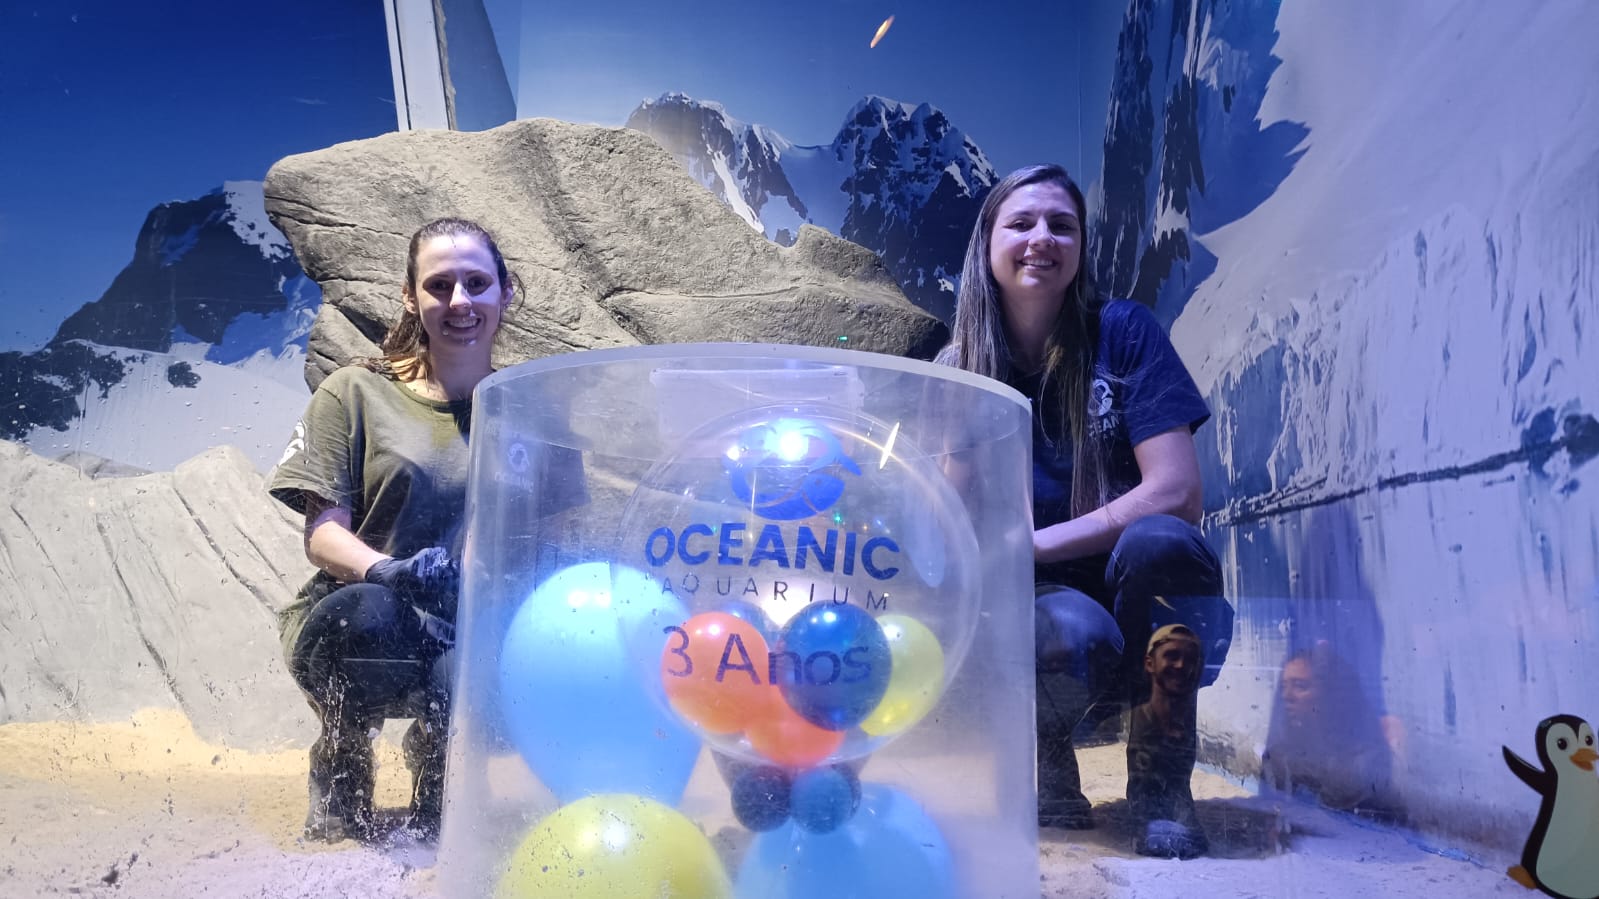 Oceanic Aquarium três anos